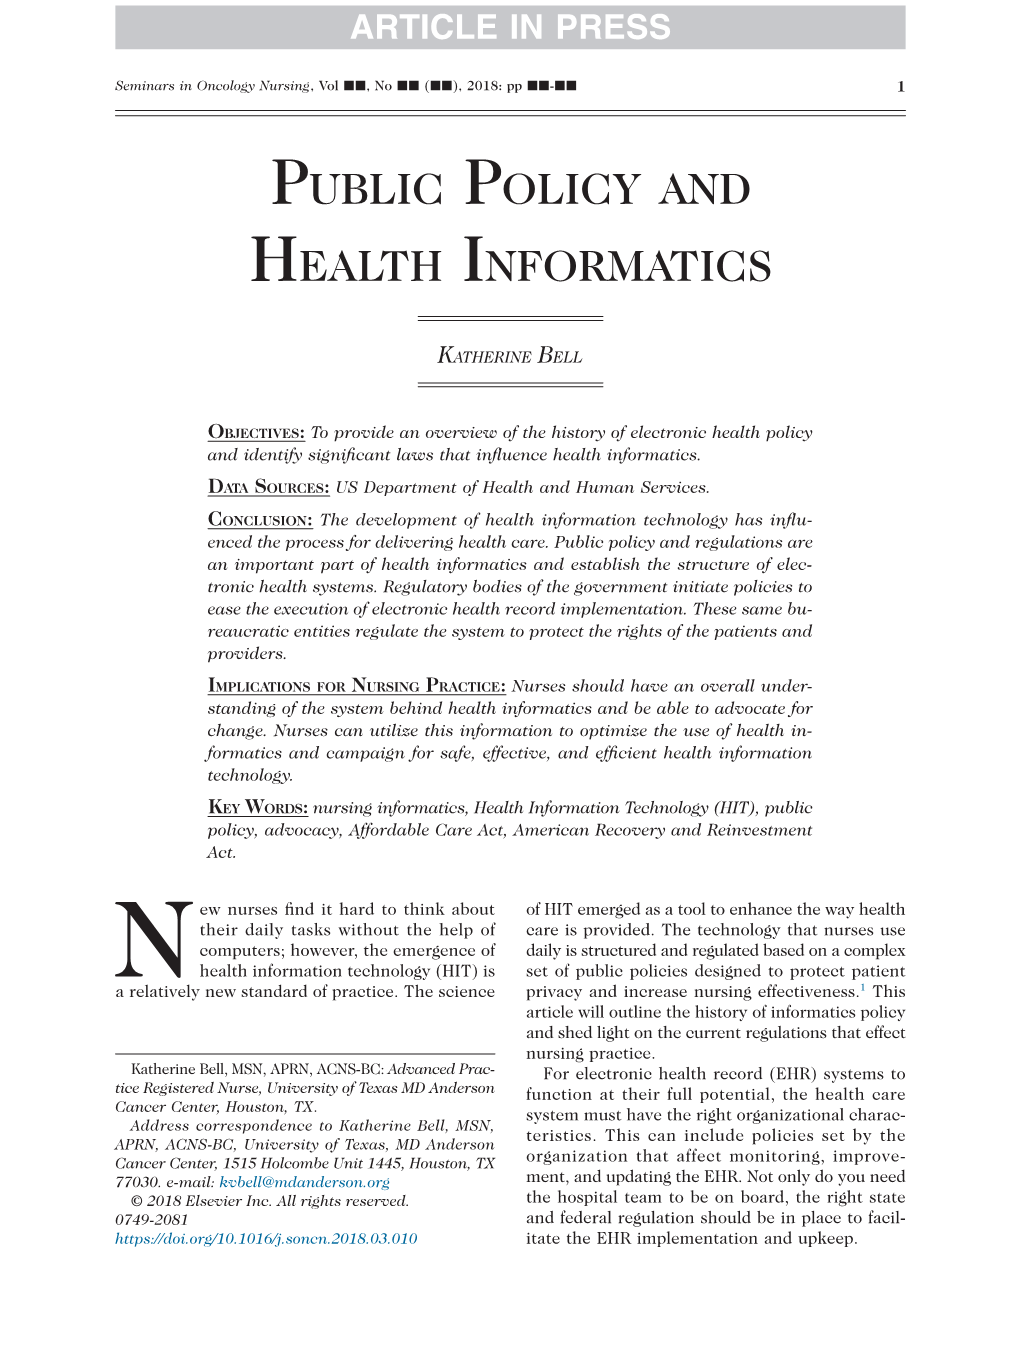 Public Policy and Health Informatics